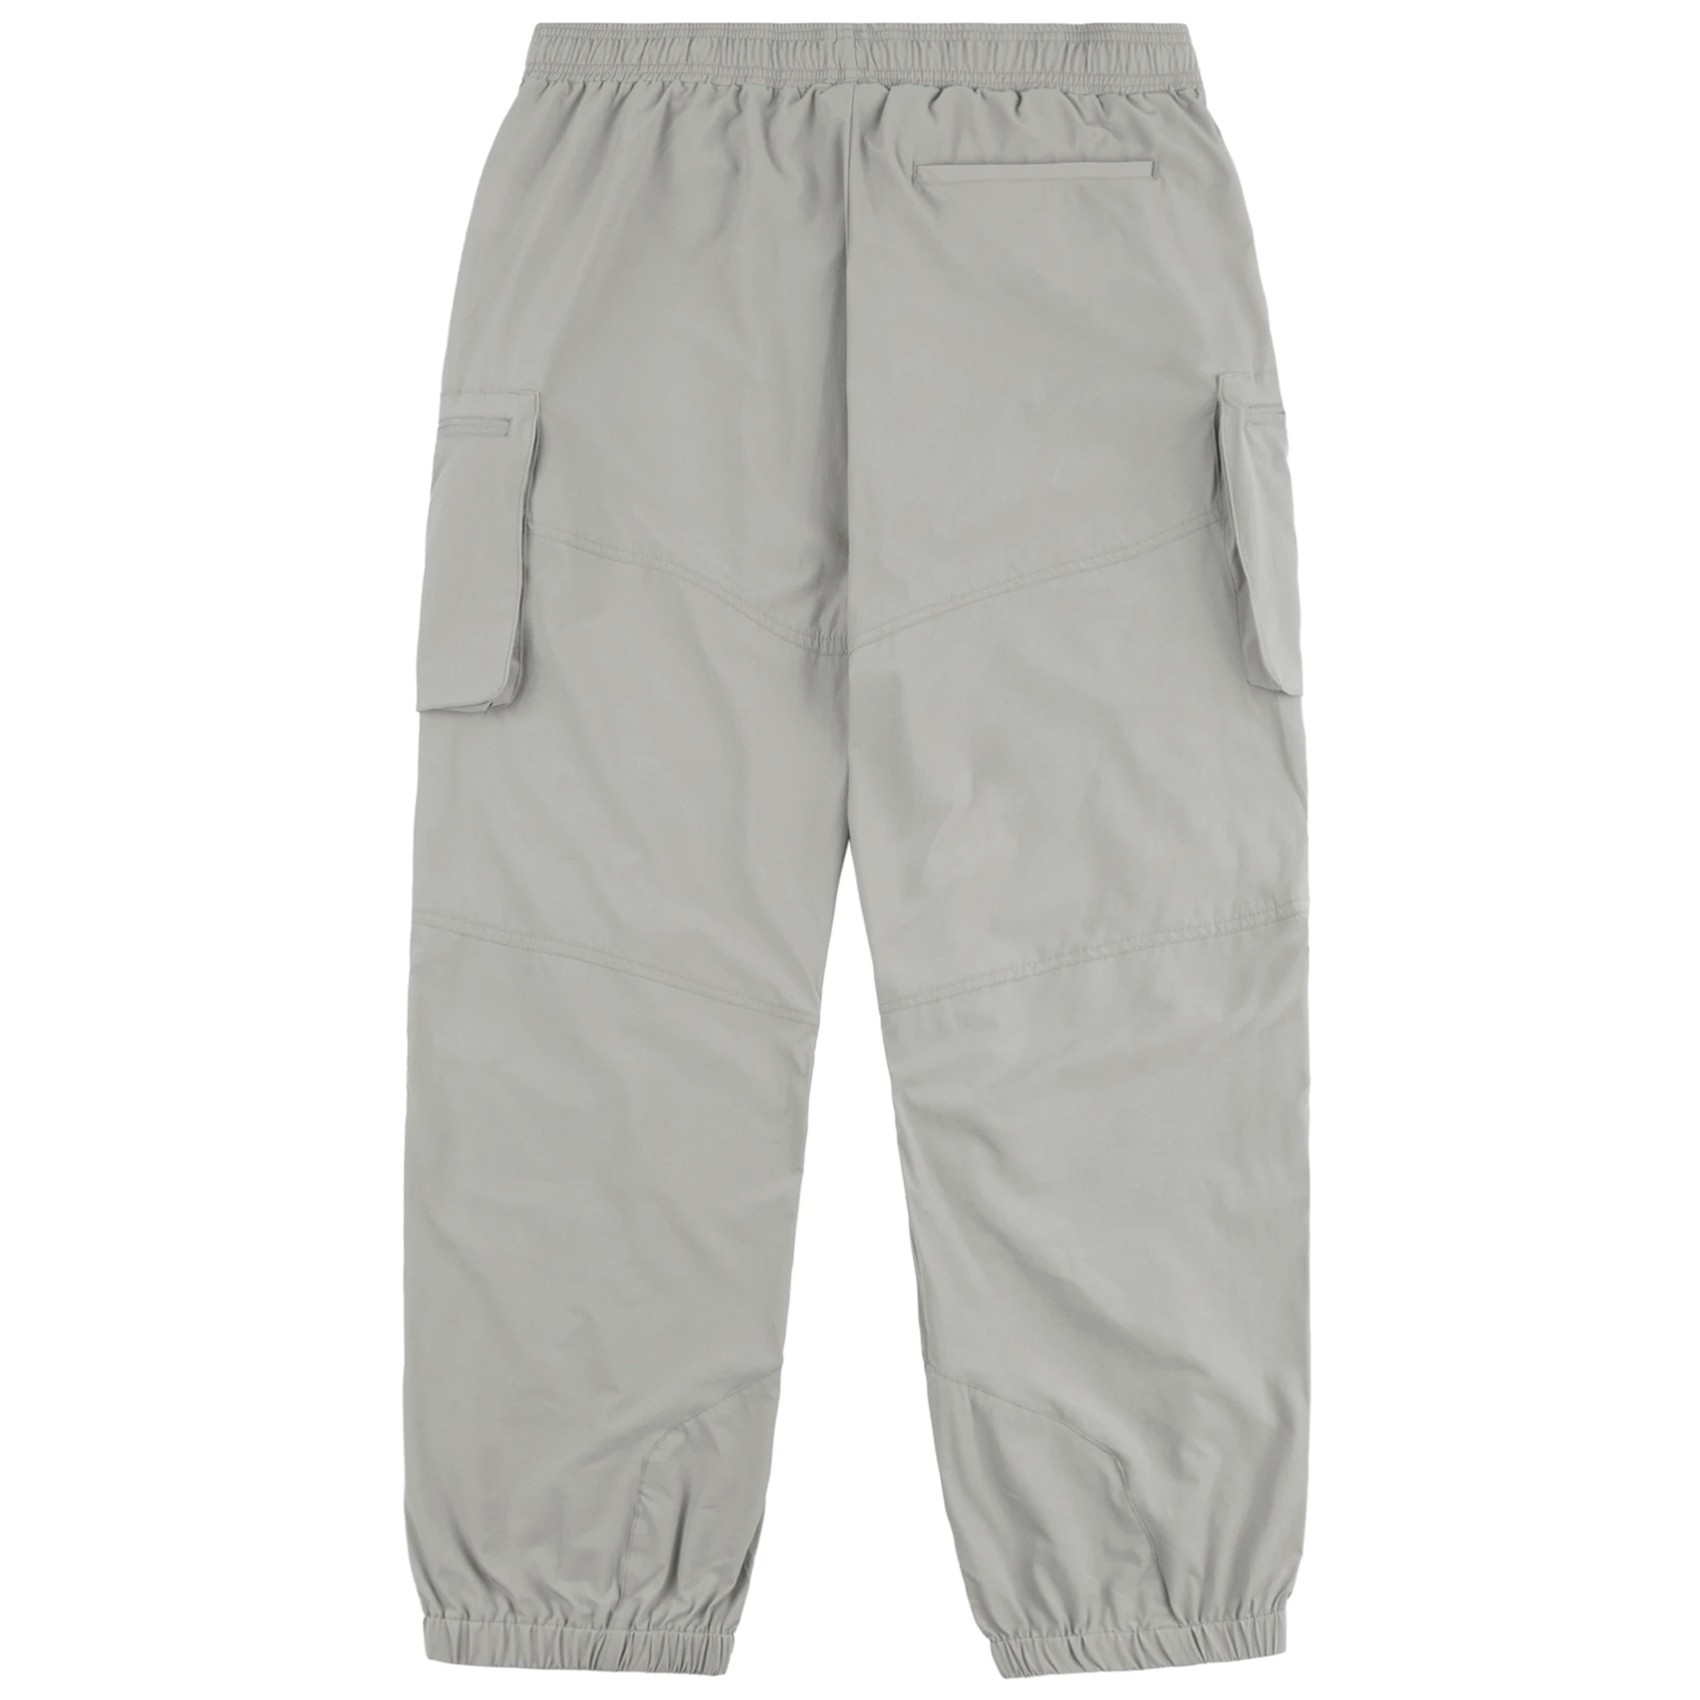 Dime Range Pants (Grey) - DIMES7007GRY - Consortium